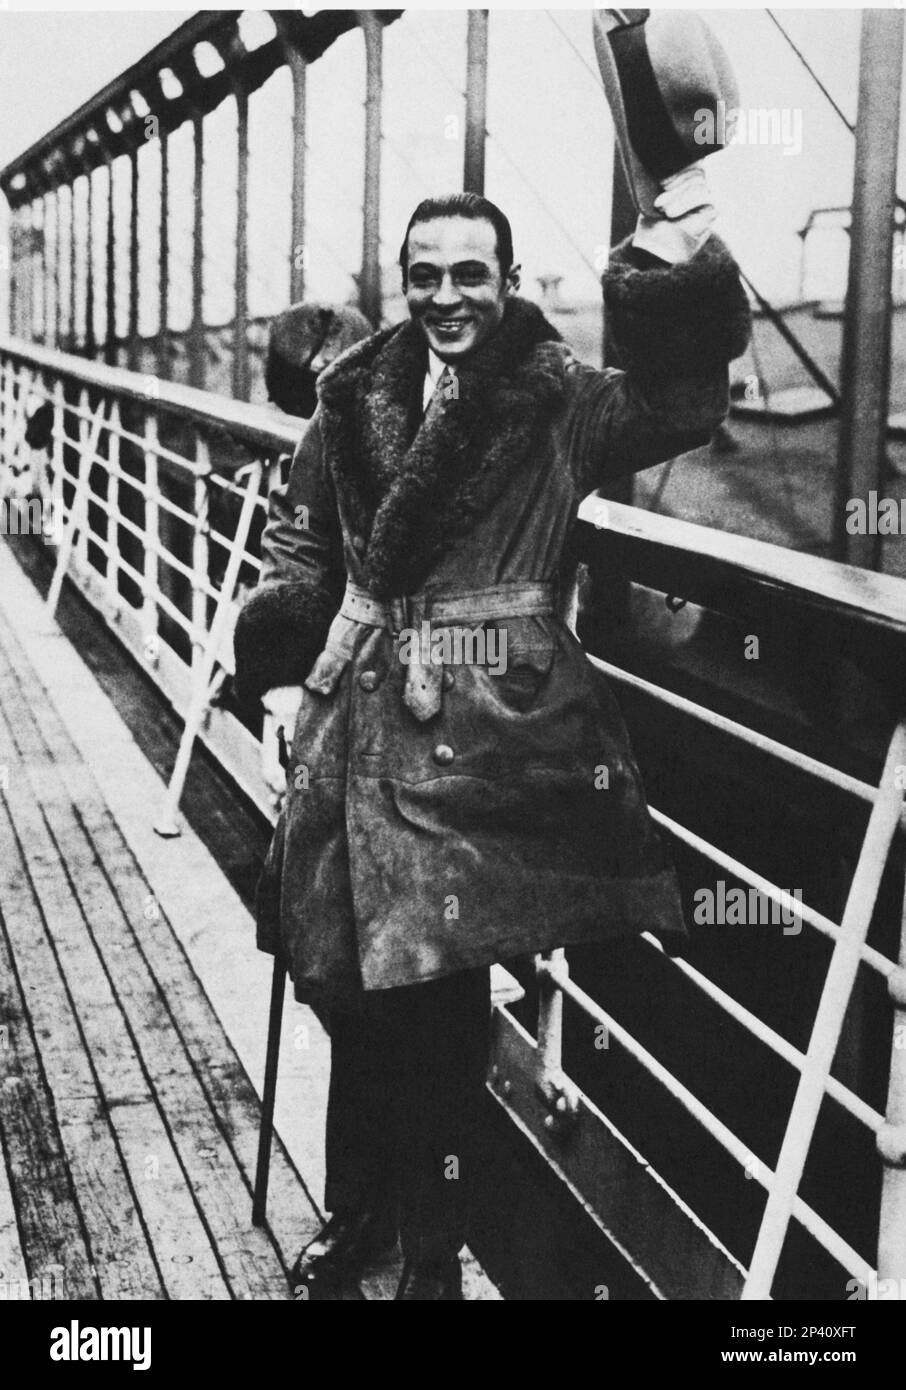 1925 , New York , USA : der Stummfilmdarsteller RUDOLPH VALENTINO ( geb. Rodolfo Guglielmi , 1895 - 1926 ) fährt nach Paris , Frankreich , Nach seiner Trennung von ihrer Frau Natasha Rambova - CINEMA MUTO - attore cinematografico - LATEINISCHER LIEBHABER - italoamericano - italo americano - italo-americano - emigrante - italo-american - Portrait - ritratto - hat - cappello - ANNI VENTI - 20s - '20 - smile - sorriso - Nave - Boot - transatlantisch - transatlantico - Reise - Viaggio - Cappotto - Mantel - Pelliccia - Pelliccia - Pelz - Brilantina - Fett - Bastone da passeggio - Stock - Gürtel - Cintura Stockfoto